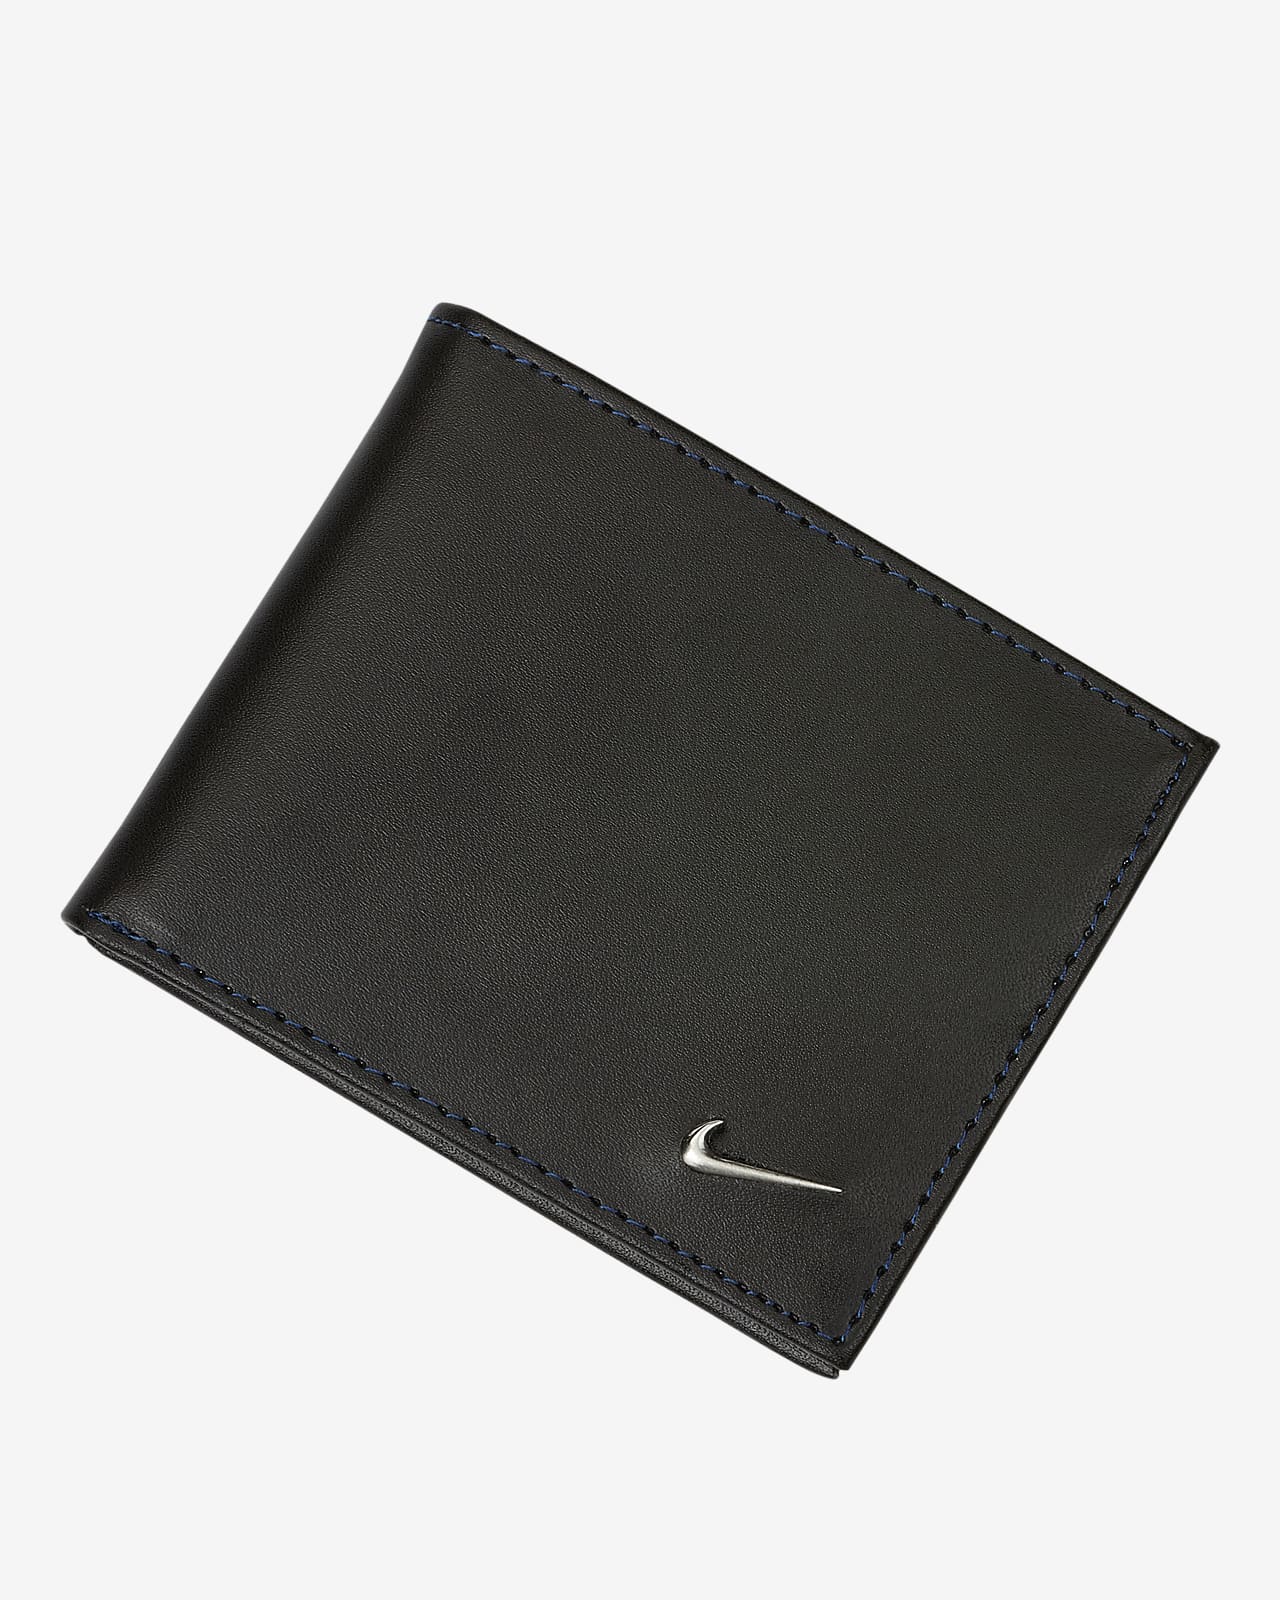 black nike wallet